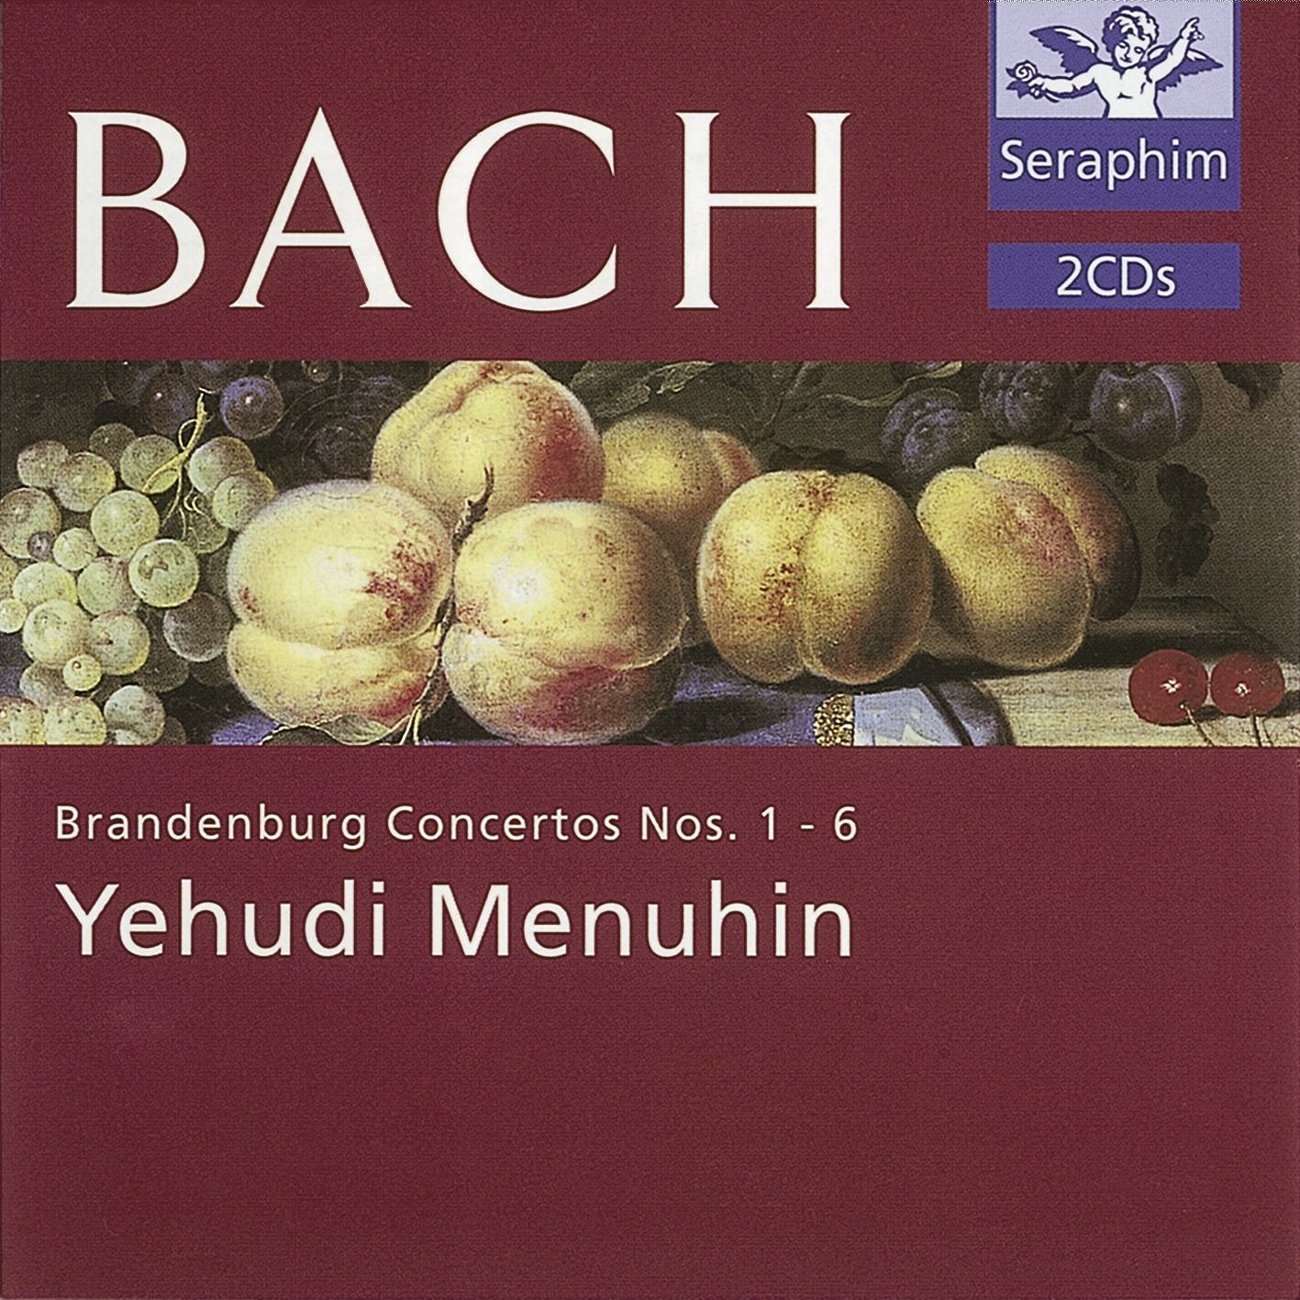 Brandenburg Concerto No. 6 in B flat BWV1051 (1989 Digital Remaster): I.       [Allegro]